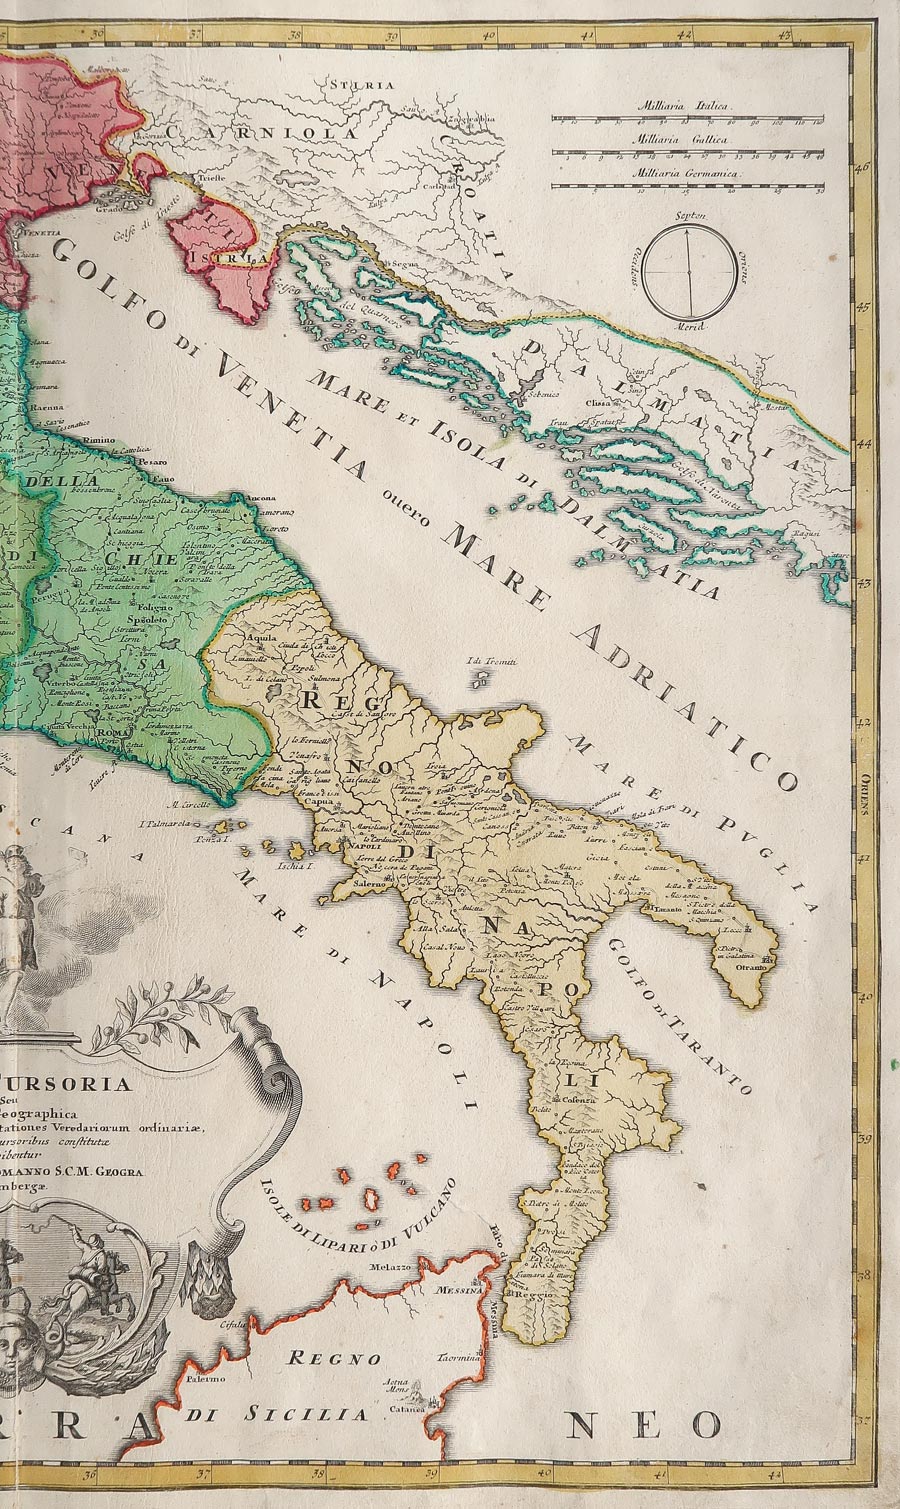 italia cursoria tabula geographica